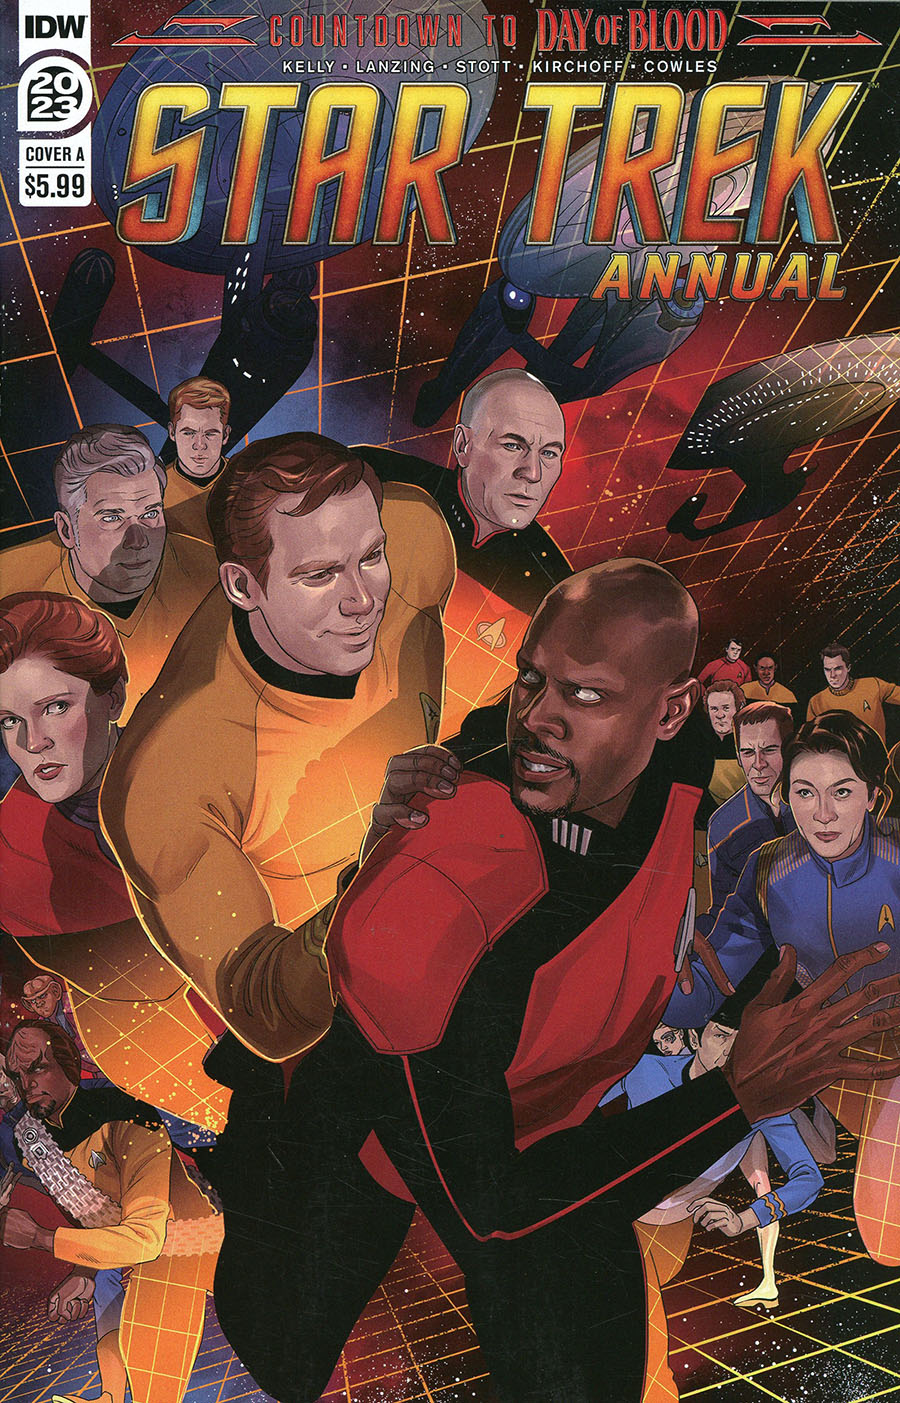 Star Trek (IDW) Vol 2 Annual 2023 #1 Cover A Regular Rachel Stott Cover